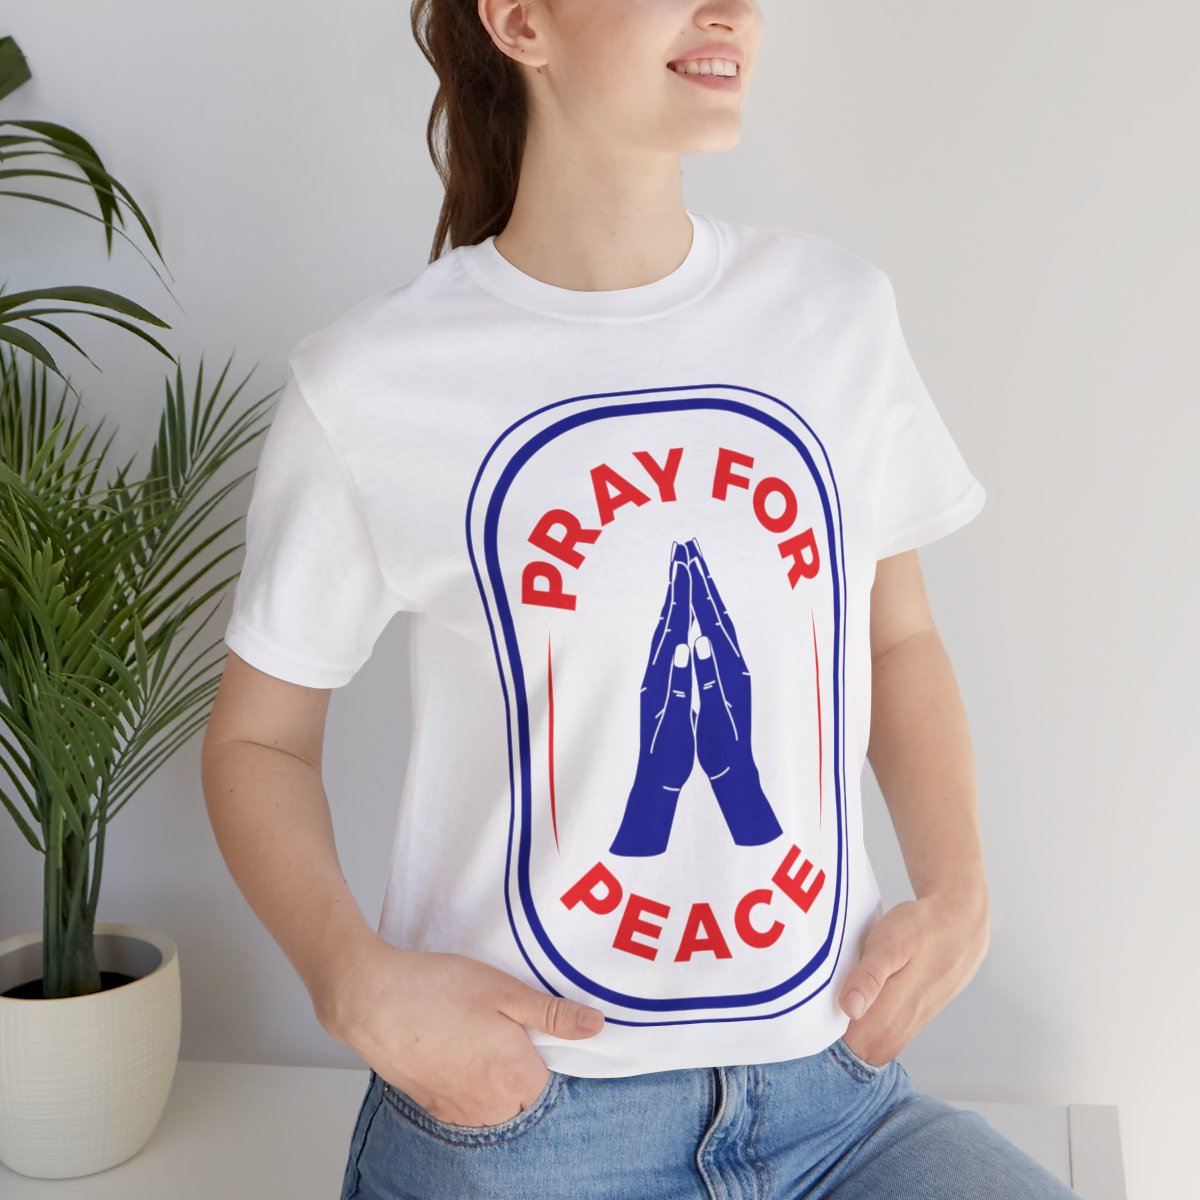 Pray for Peace t-shirt product thumbnail image